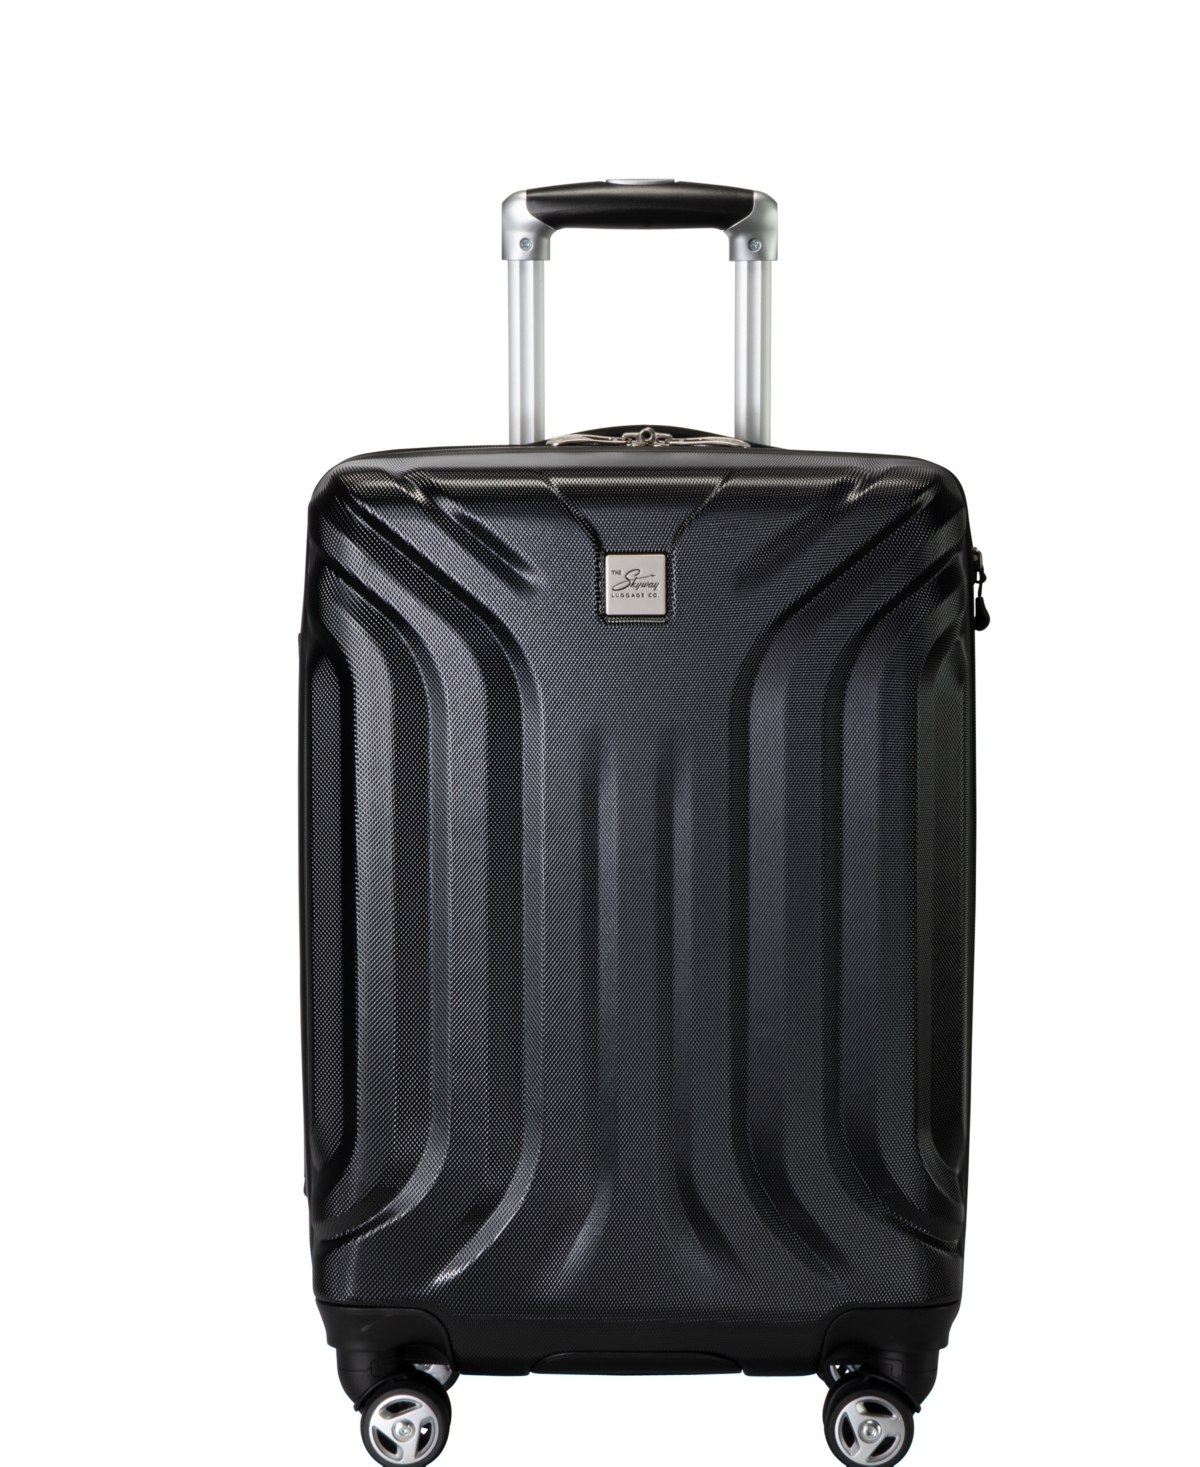 Skyway Nimbus 4.0 20" Hardside Carry-on Suitcase In Black